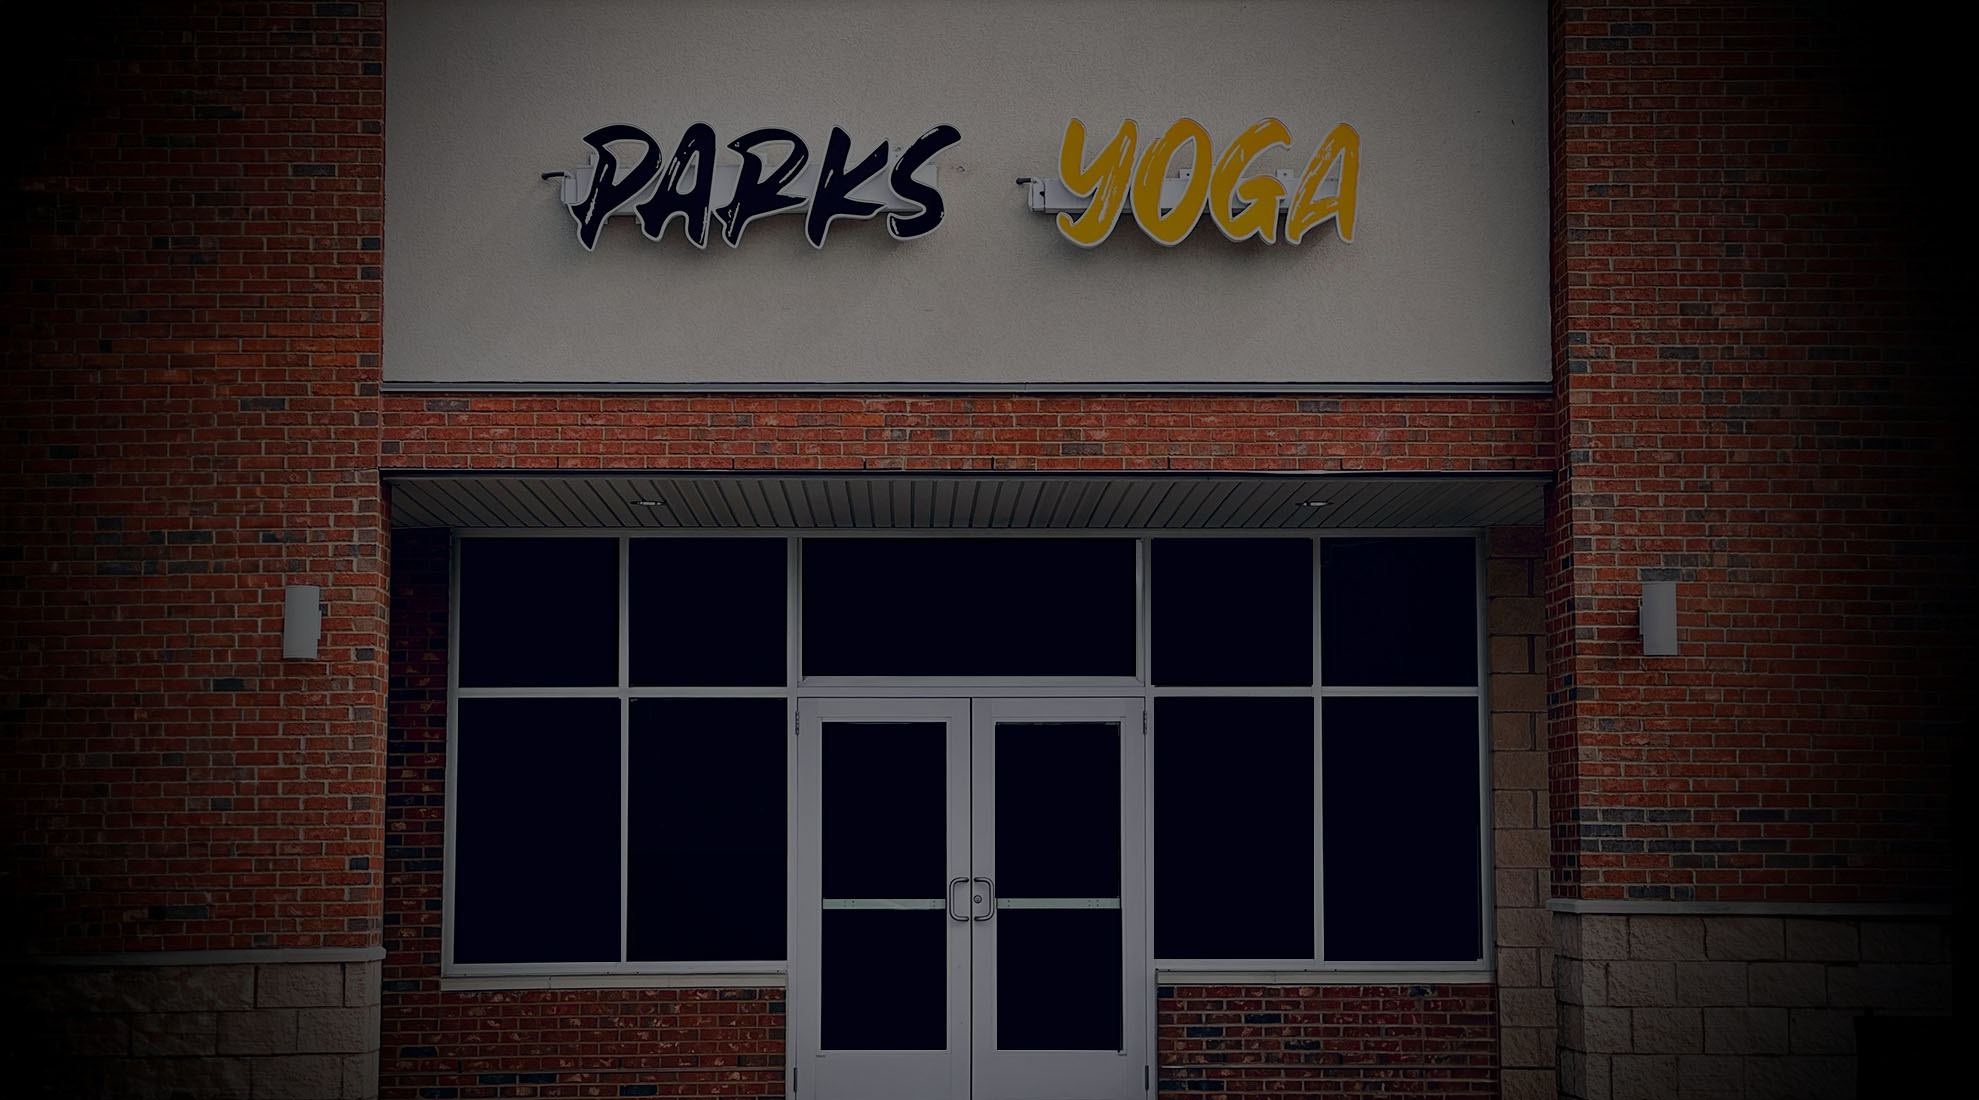 Parks Yoga